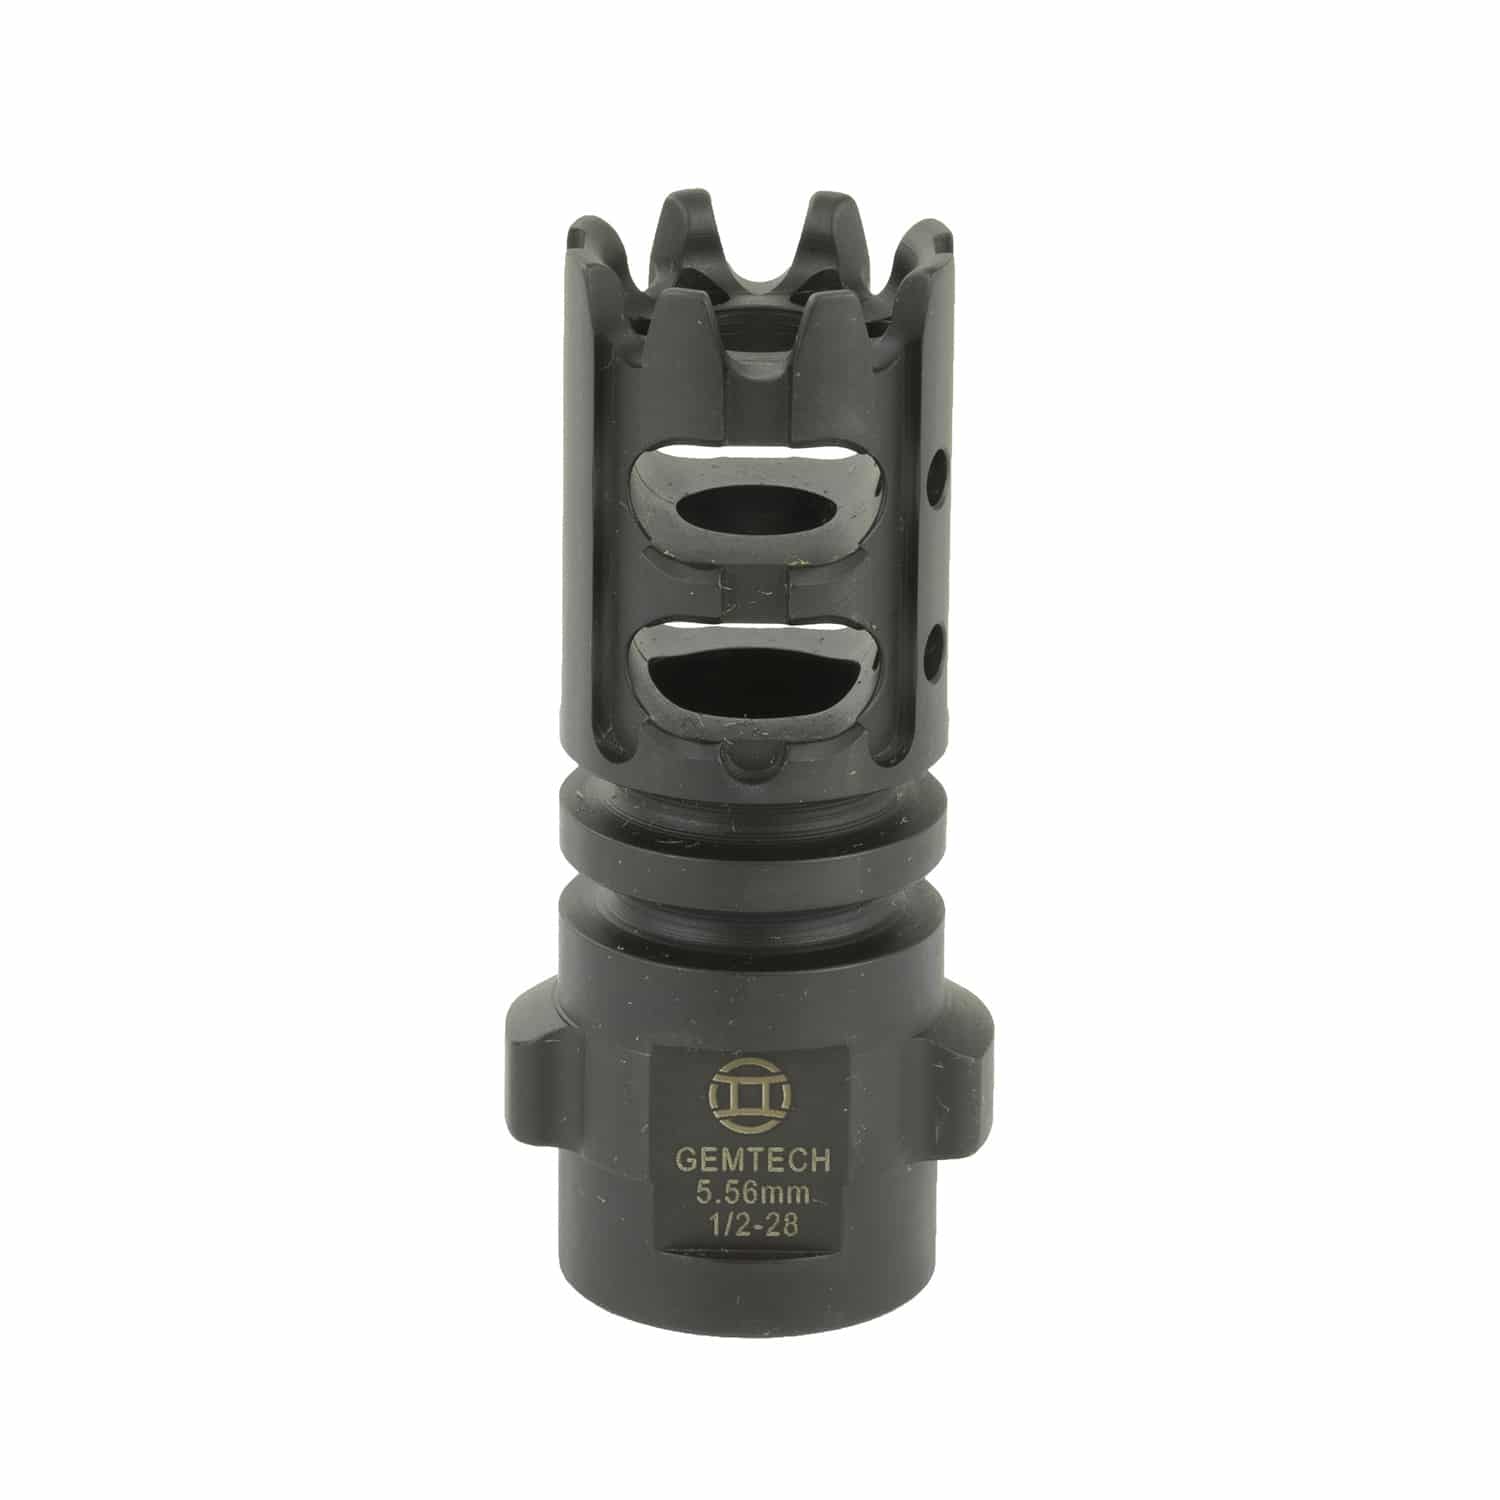 Cadex MX1 Micro Muzzle Brake for AR15, 1/2-28 for .223/5.56